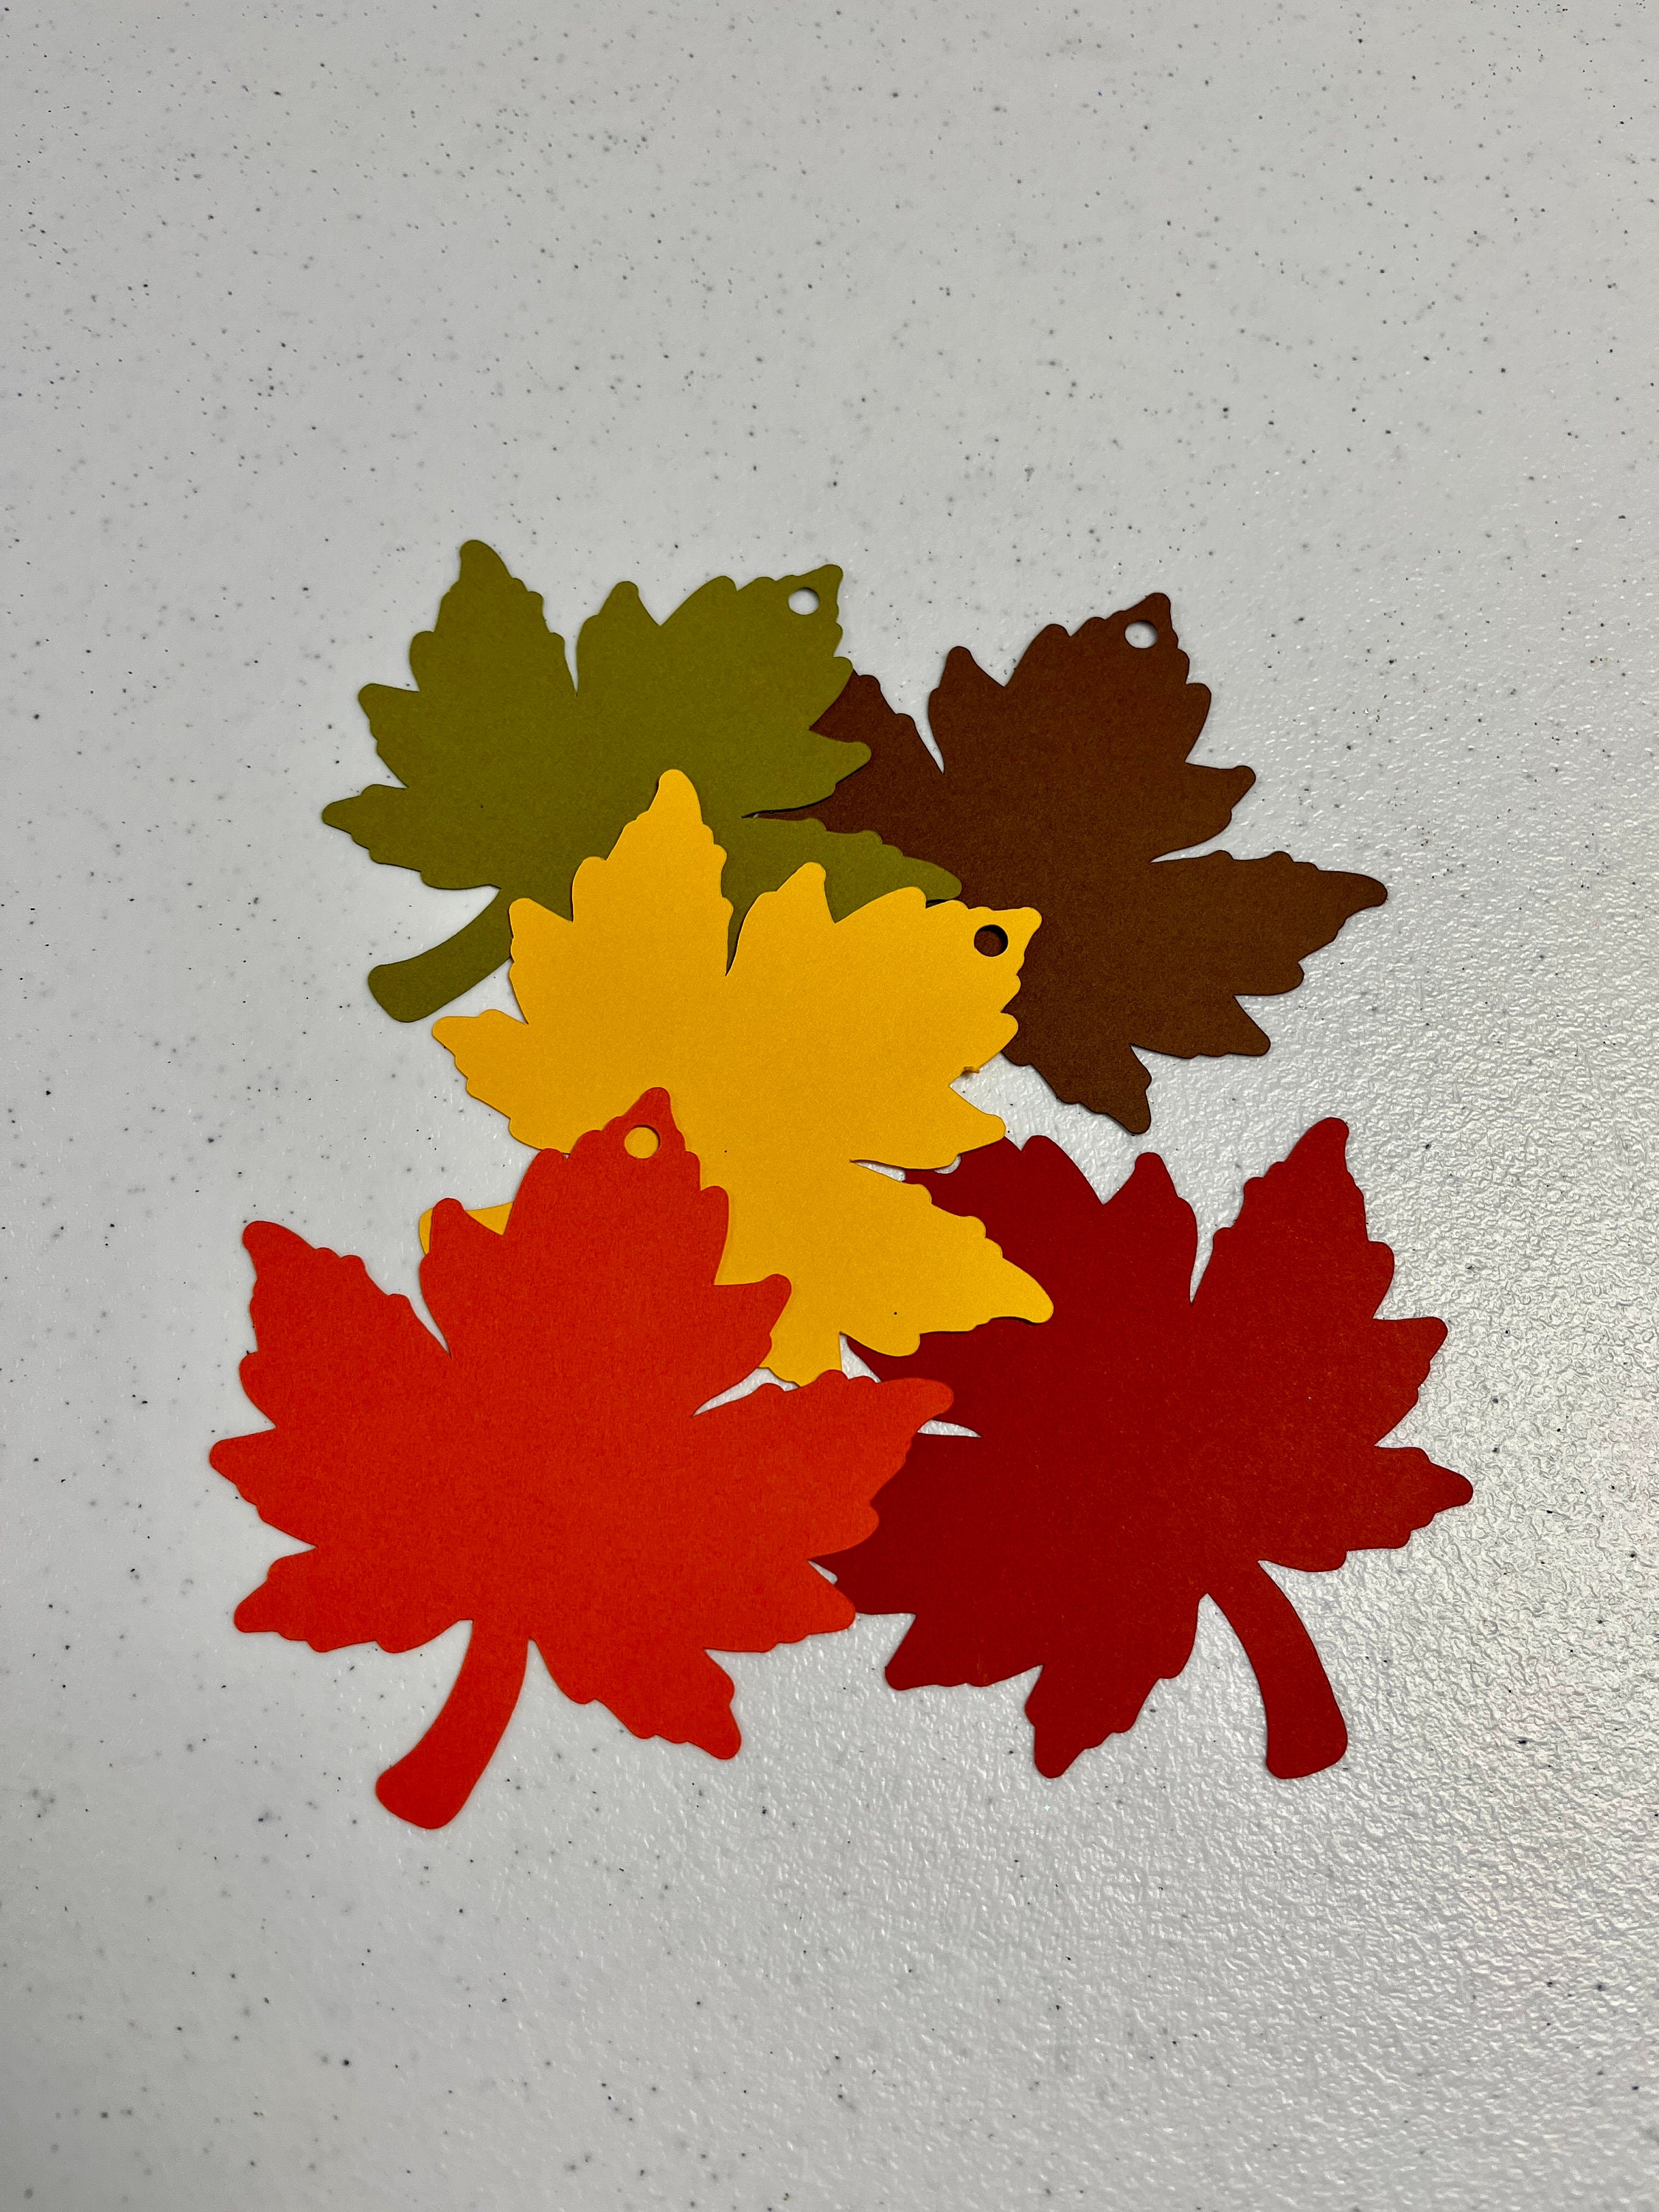 Fabulous Foam Fall Adhesive Leaf Shapes - Bulk Set Of 500 - DIY Crafts For  Kids 